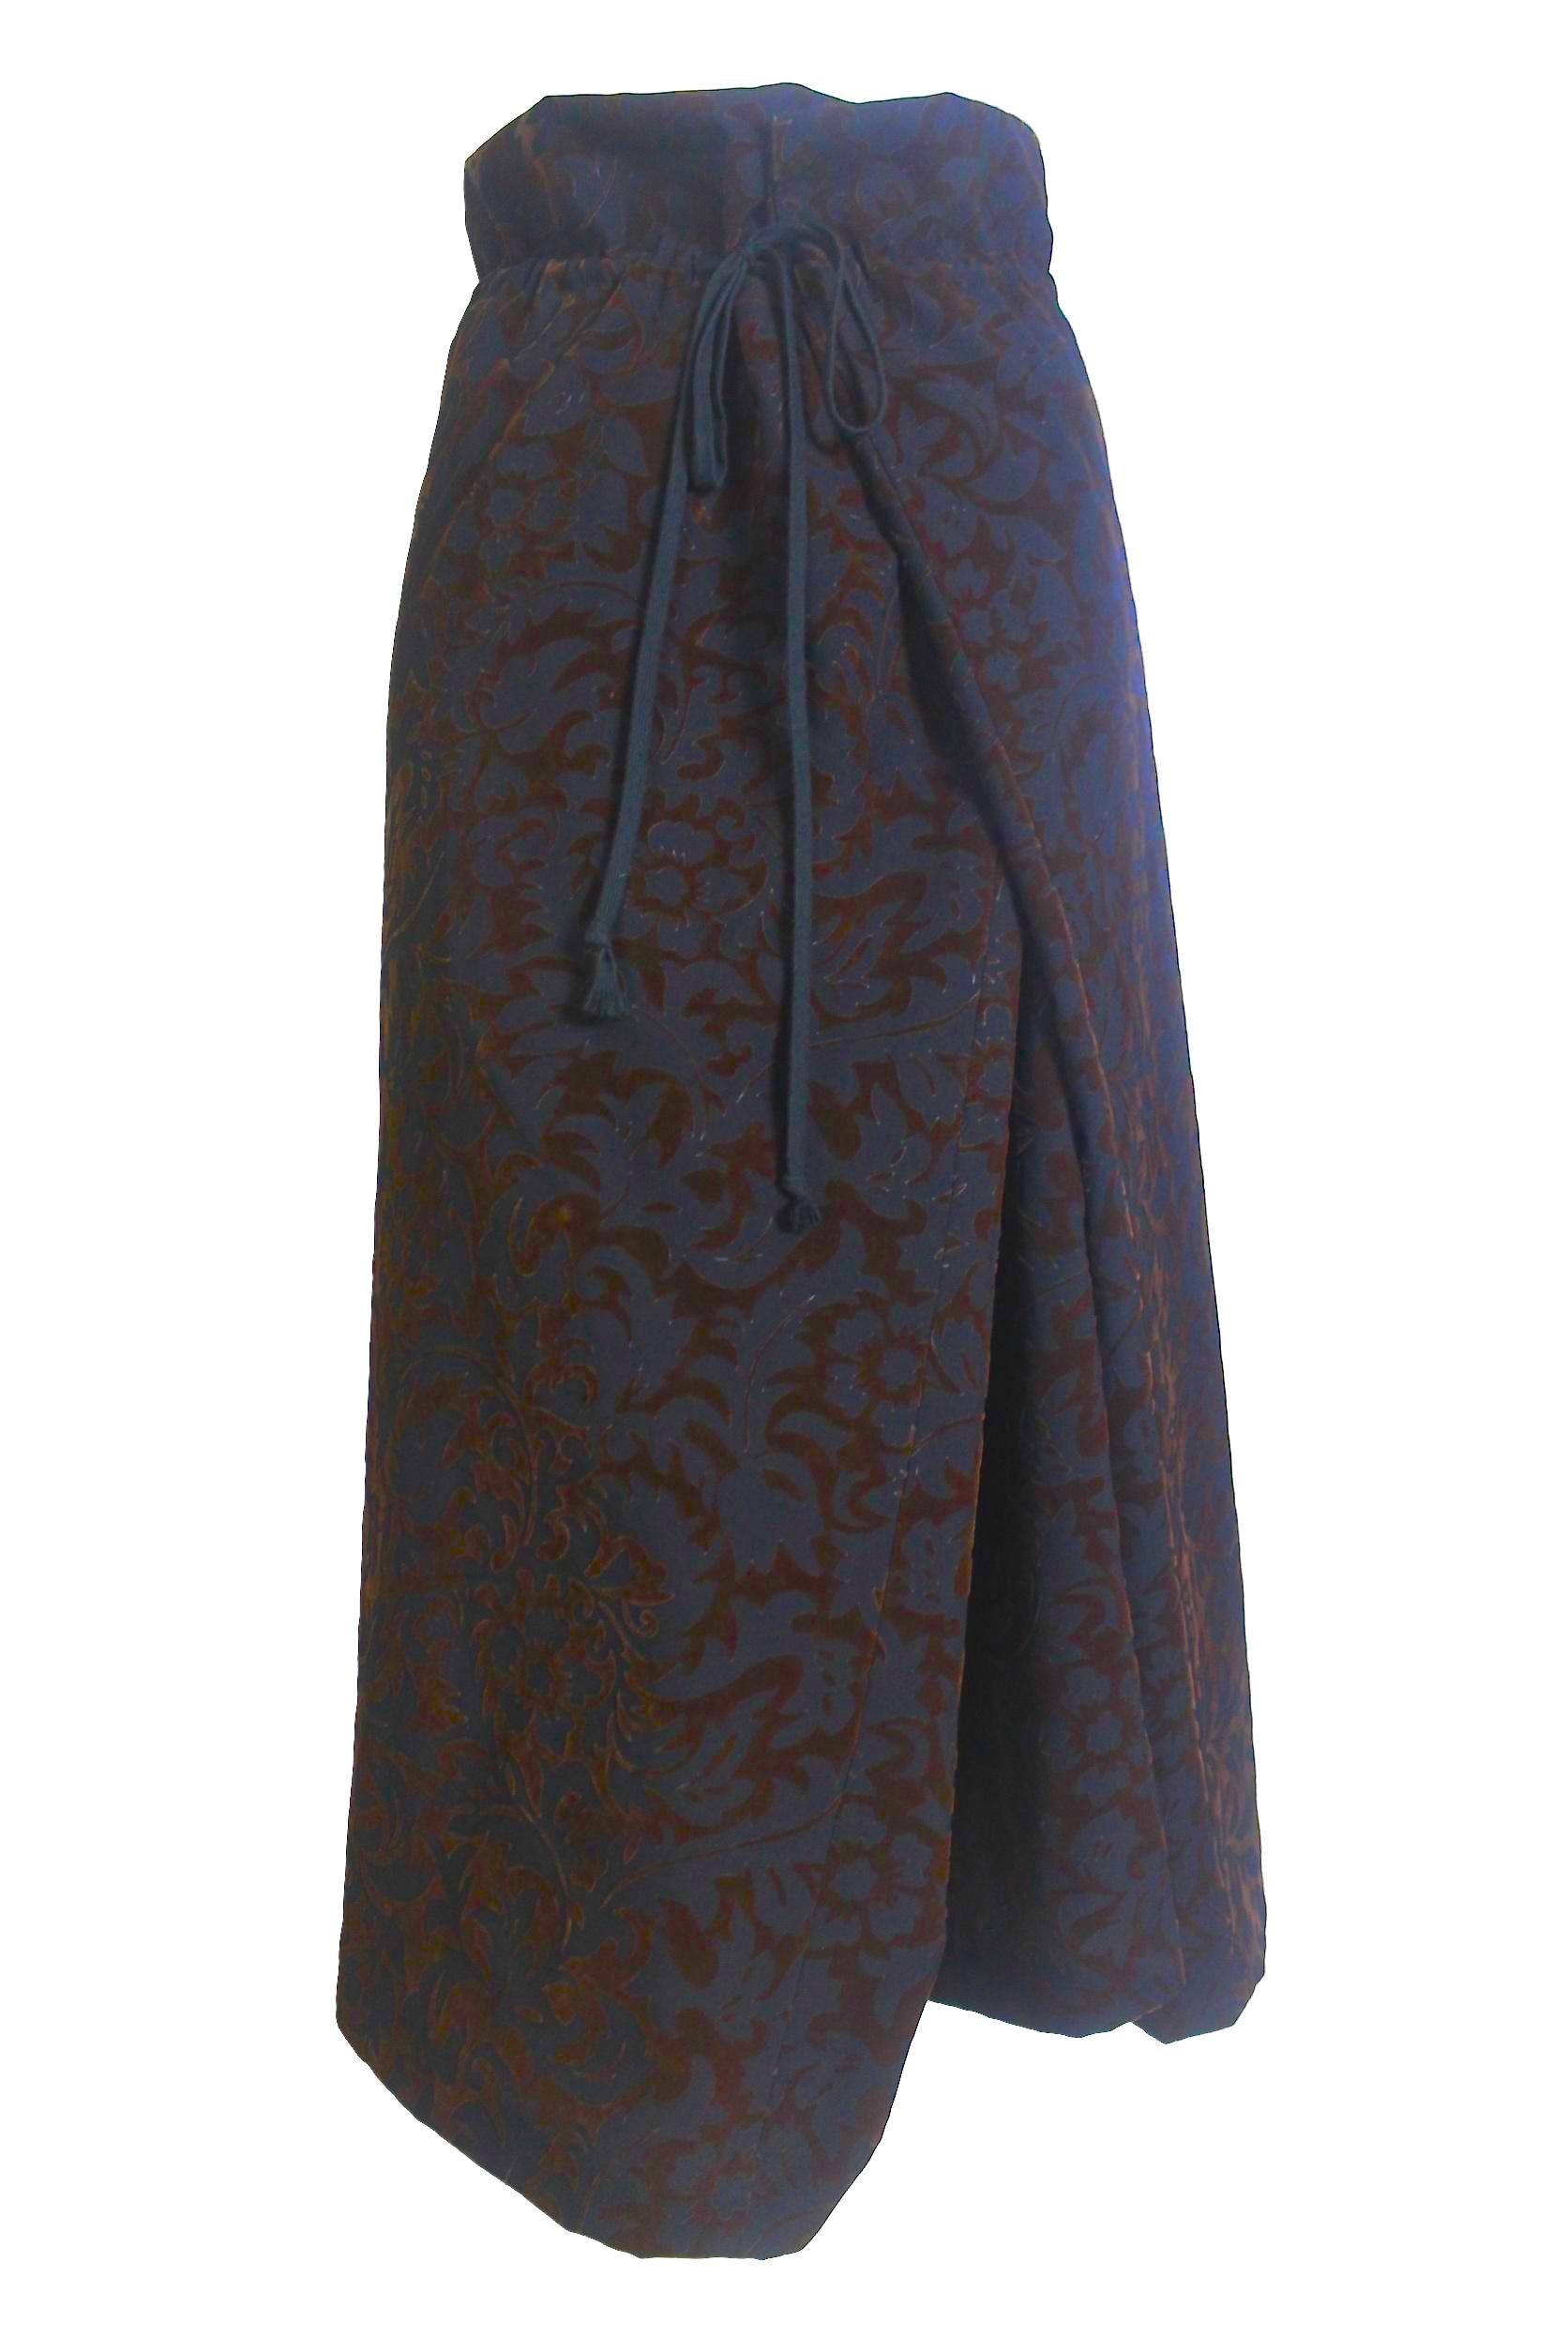 Comme des Garcons Flat Envelope Wool Skirt AD 1996 For Sale 9